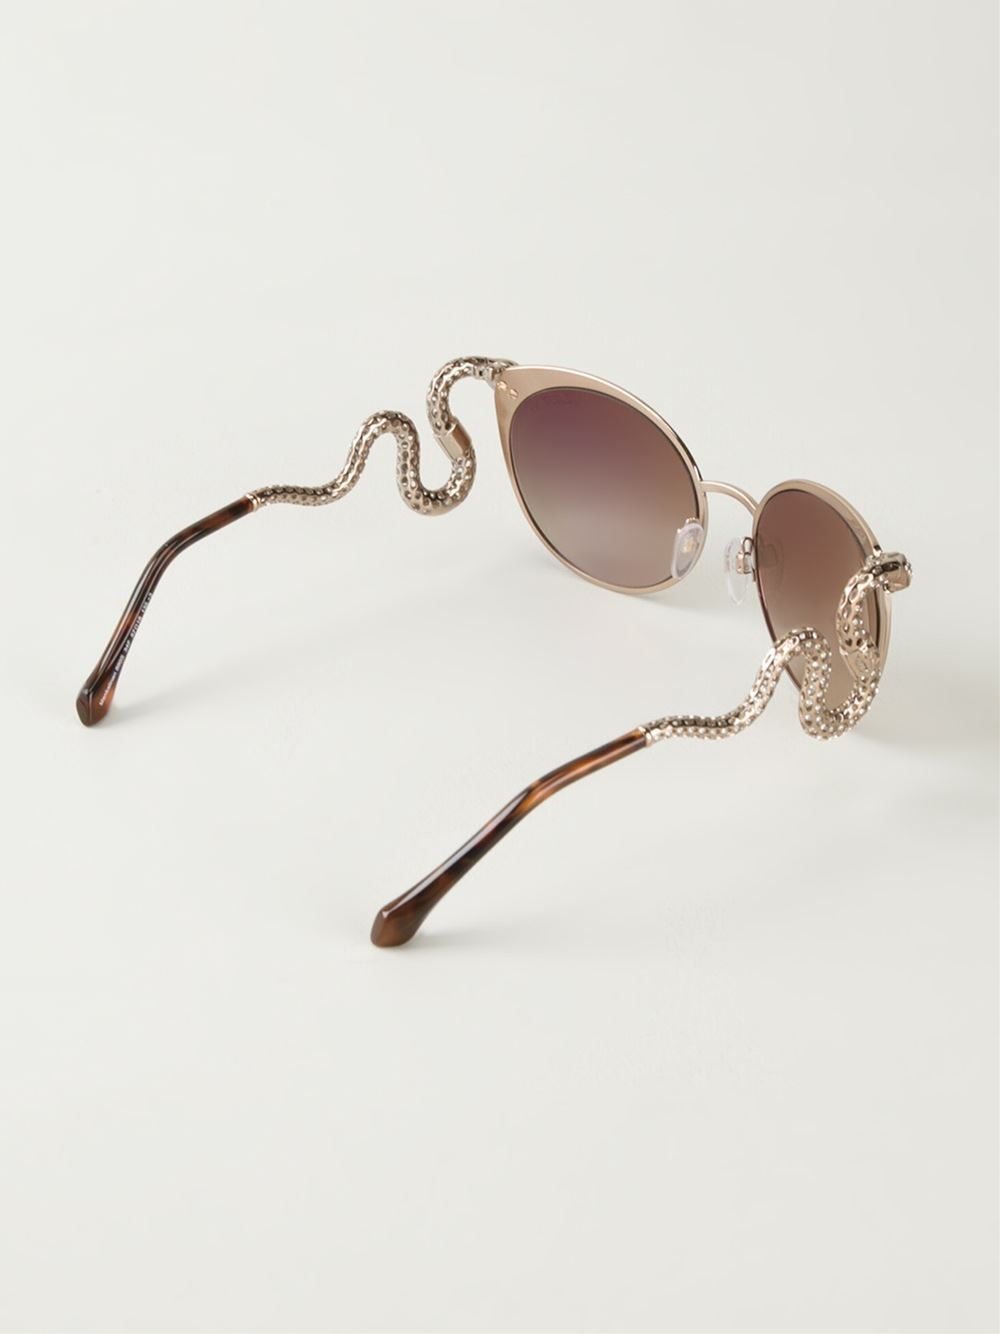 Details more than 204 cavalli sunglasses mens super hot